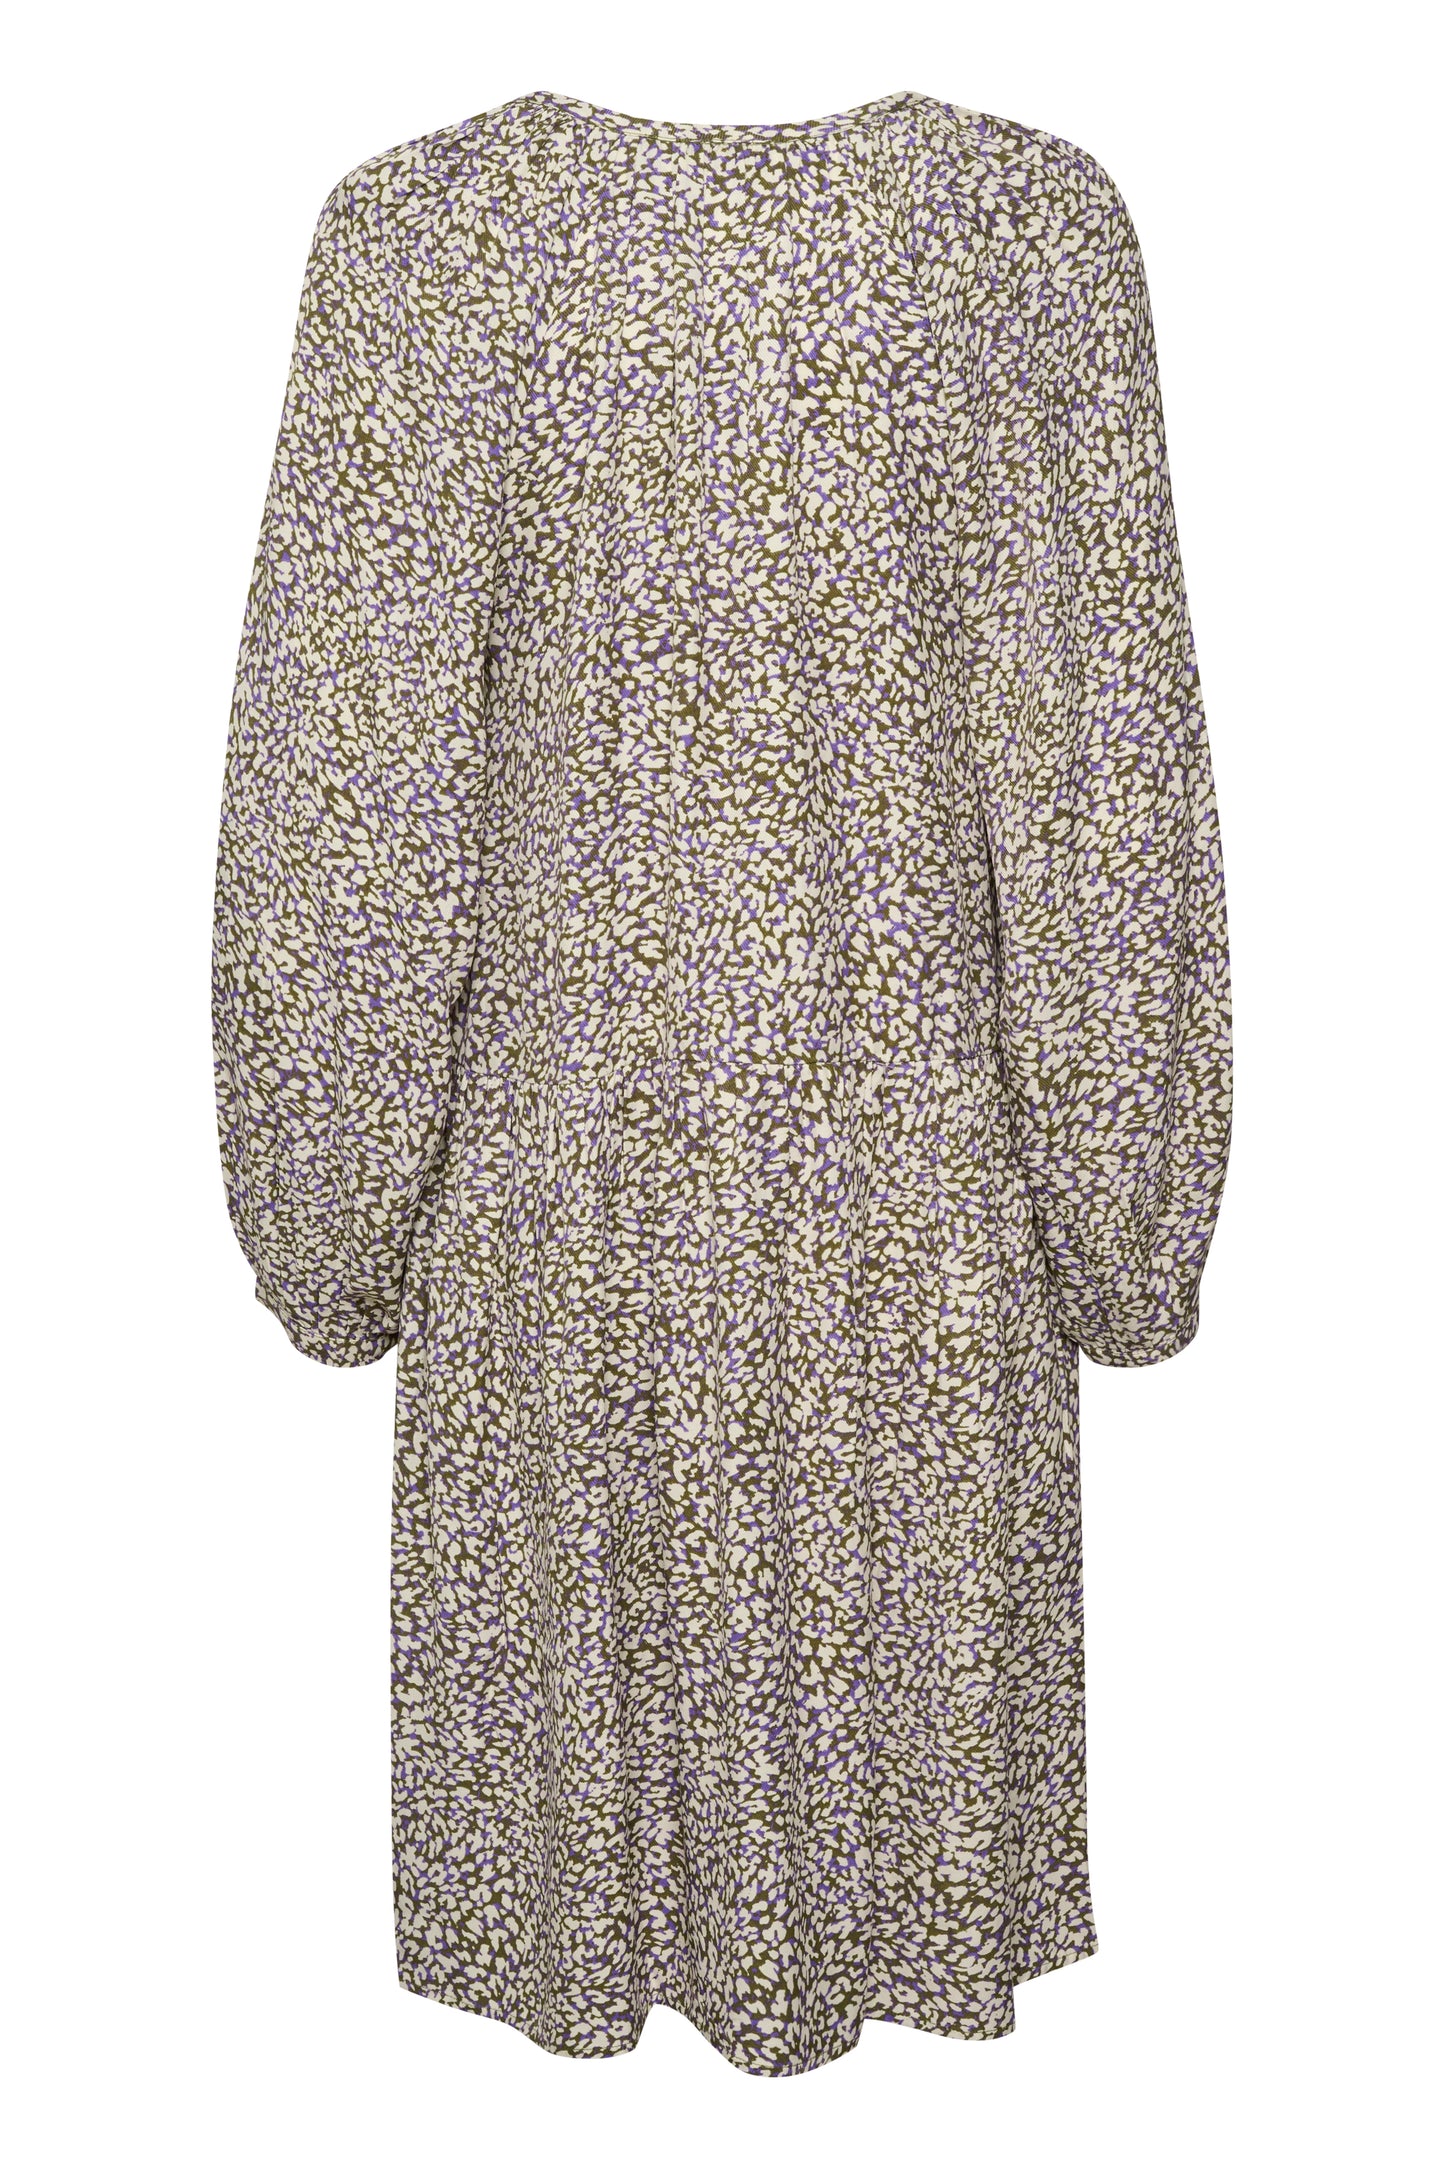  Moie Dress LS Dresses Purple Animal Print